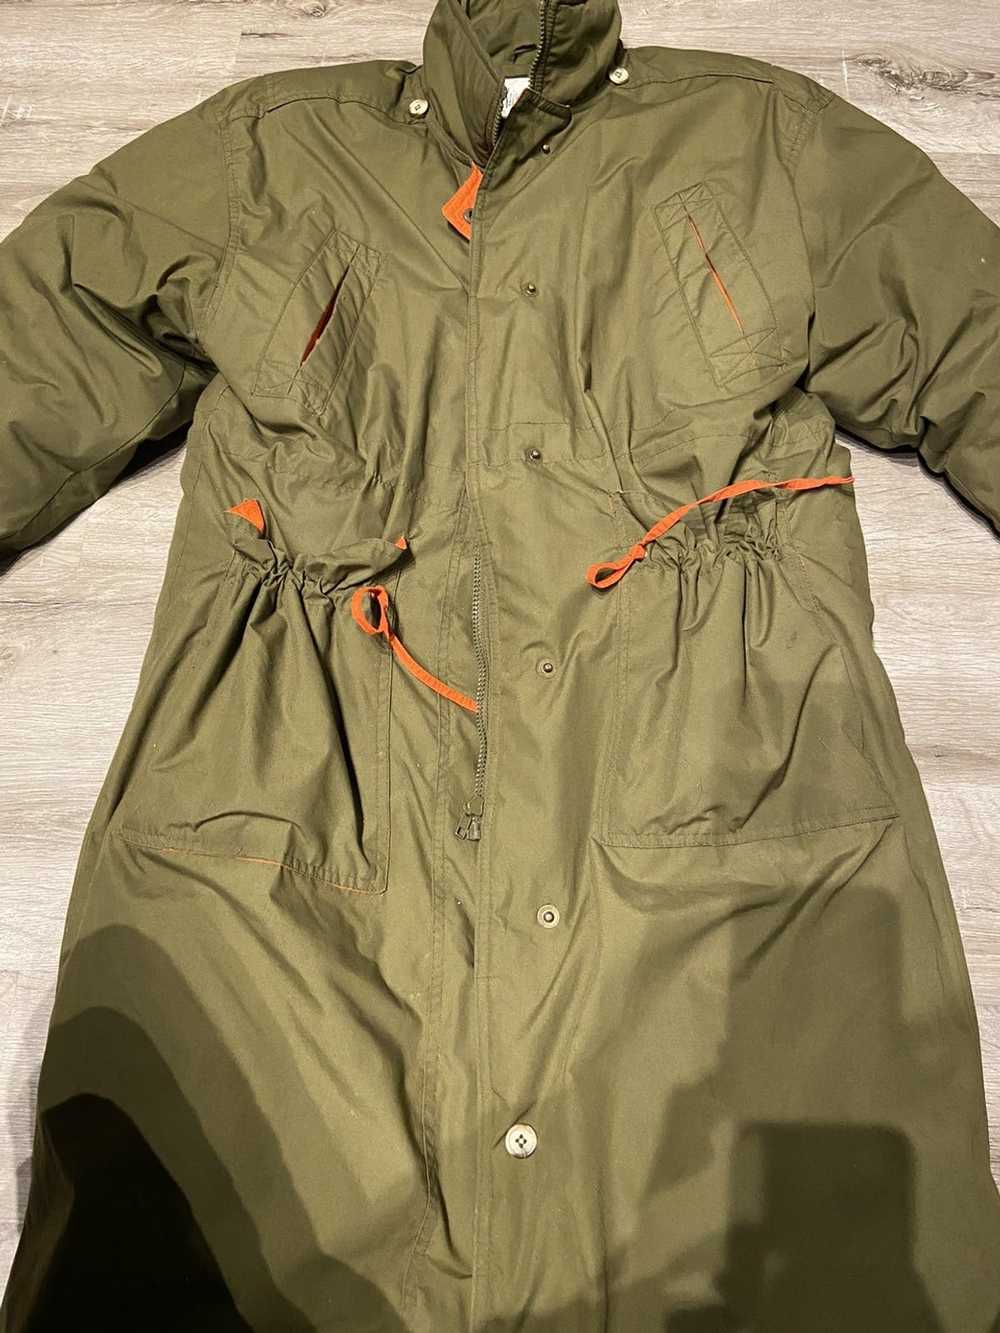 Neiman Marcus Neiman Marcus puffer trench coat - image 2